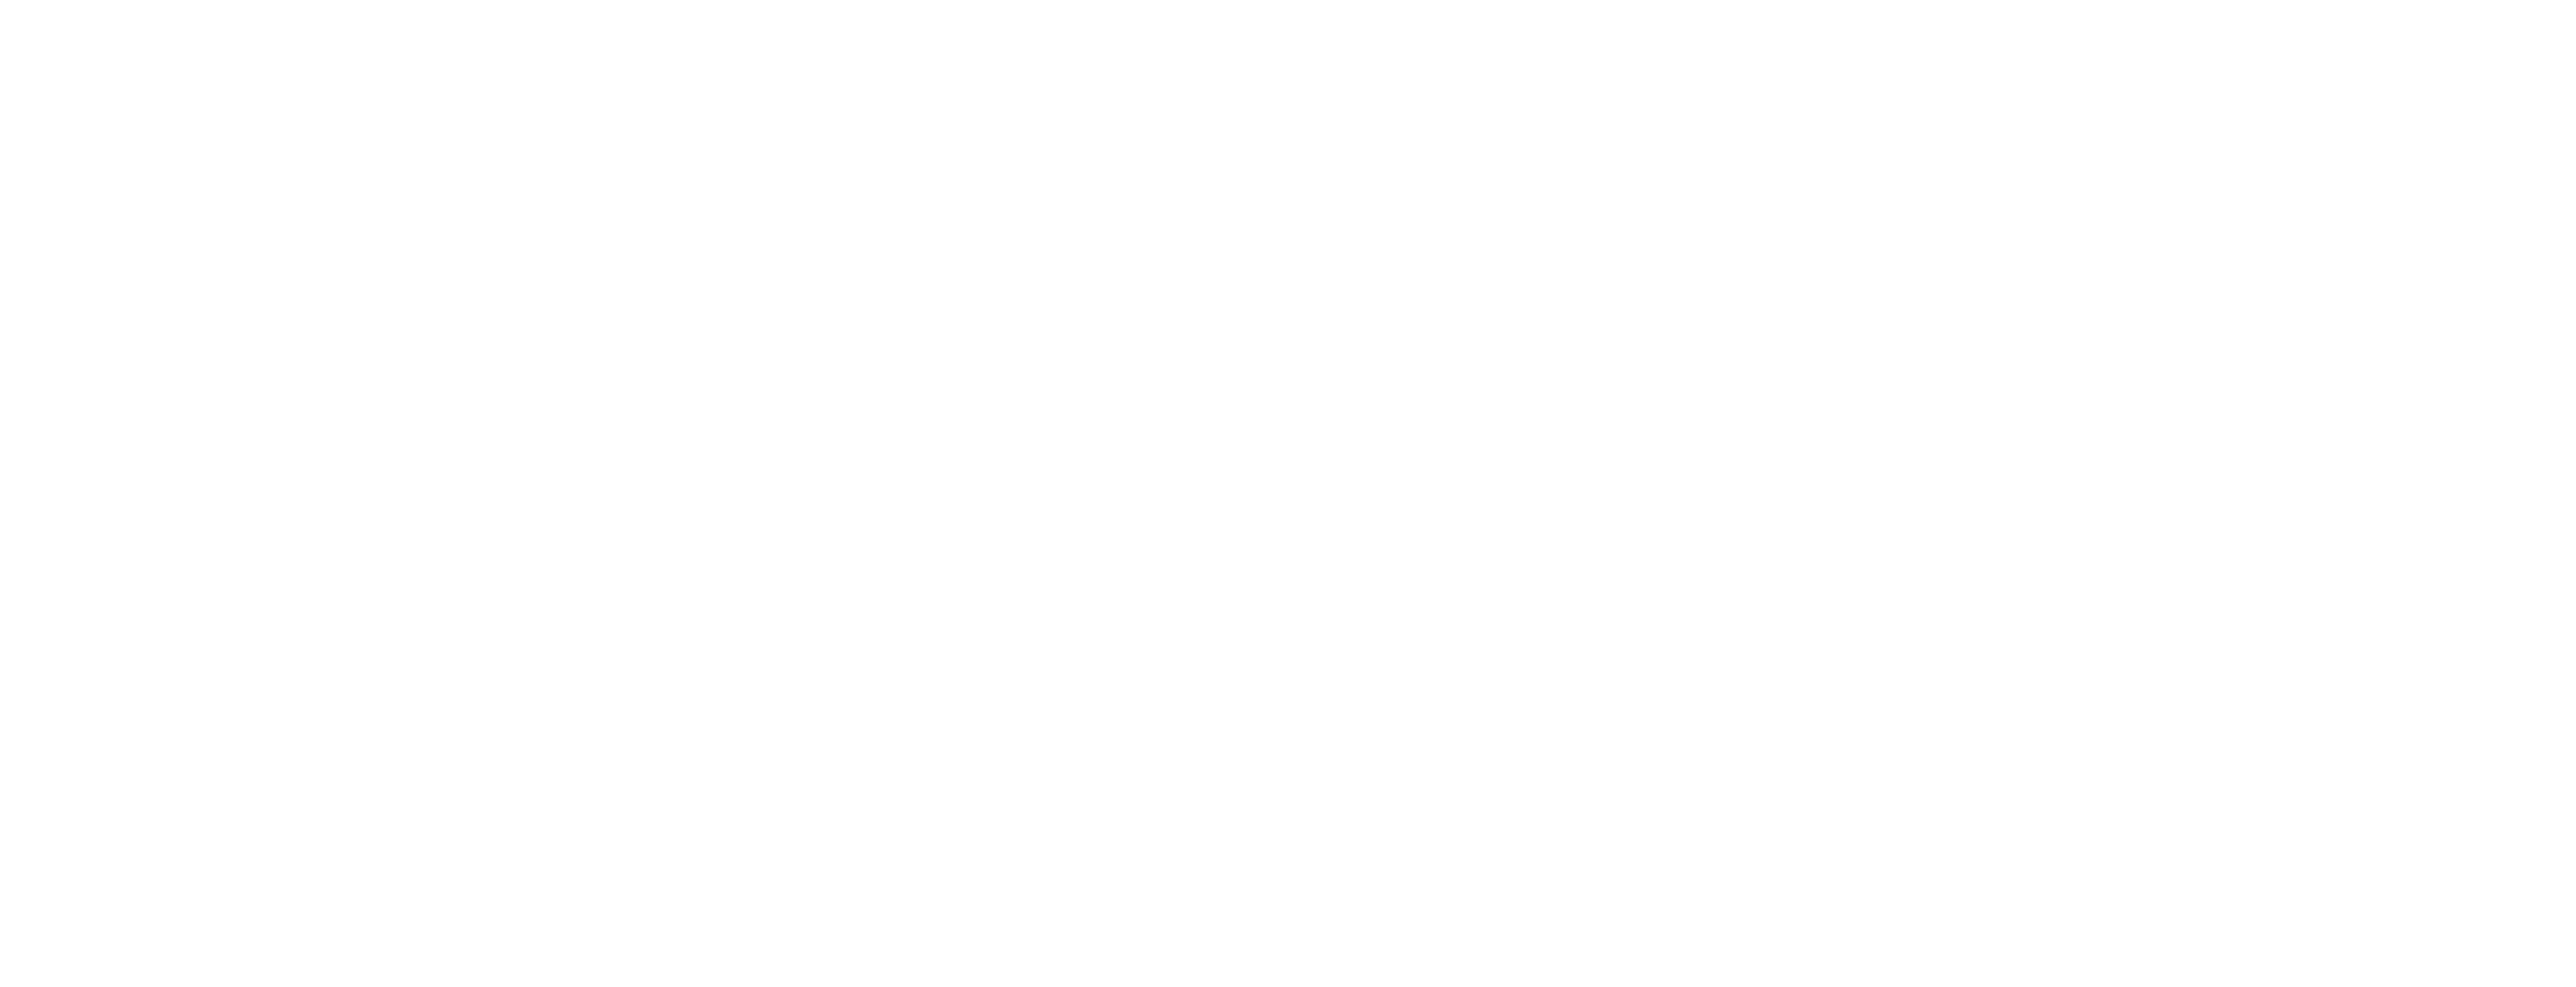 Community Leadership Network